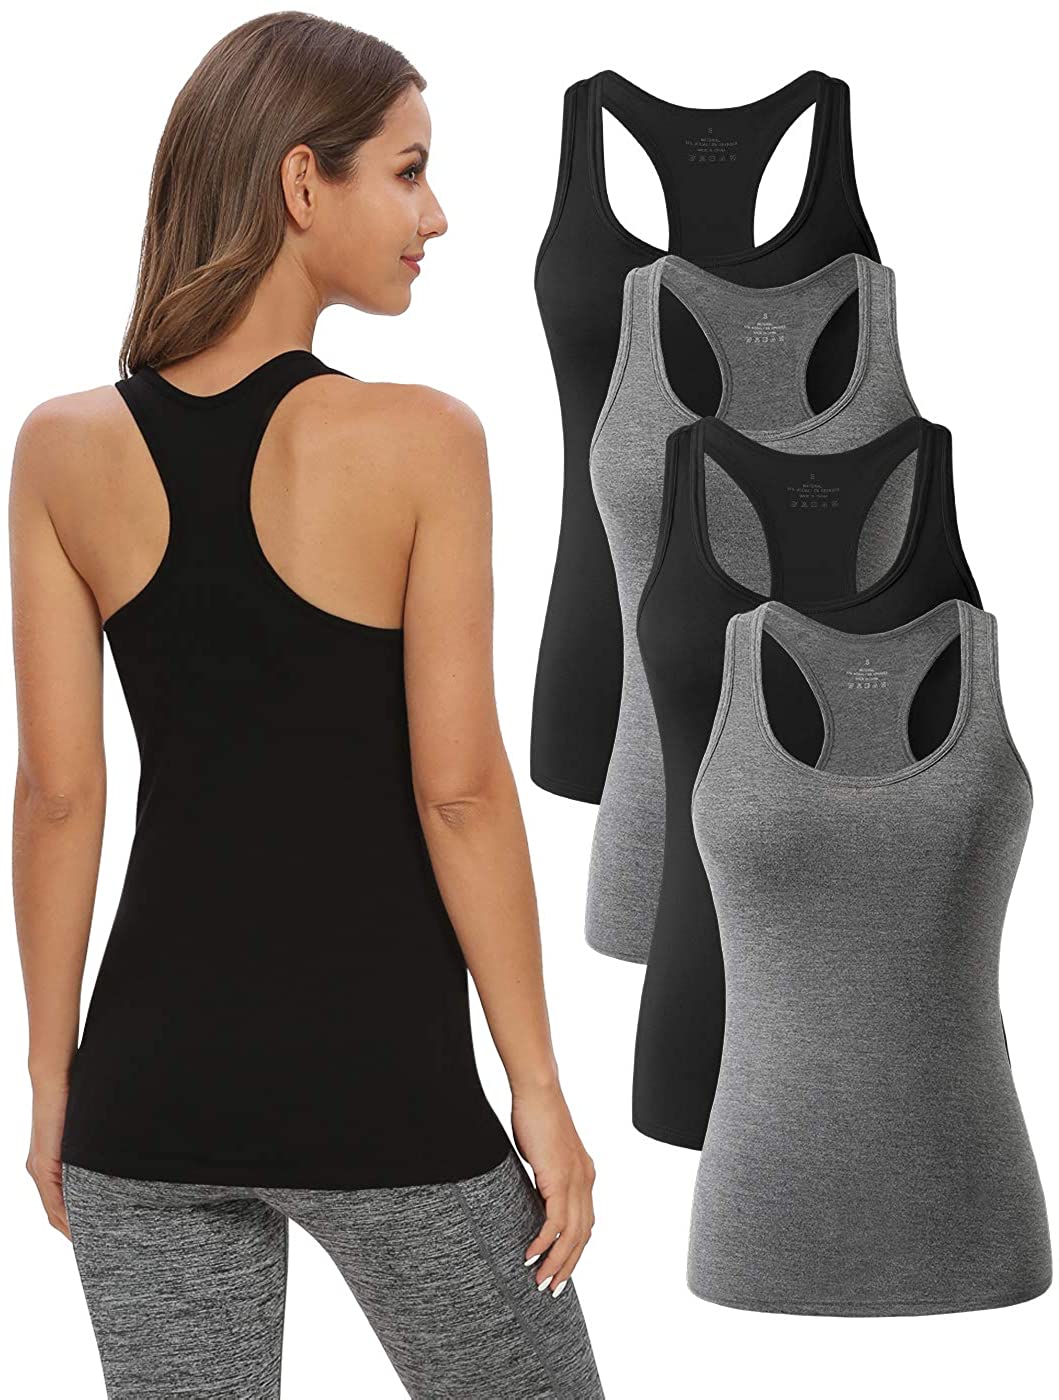 Star Vibe Racerback Workout Tank Tops for Women Basic Athletic Tanks Yoga Undershirt Sleeveless Exercise Tops 4 Pack